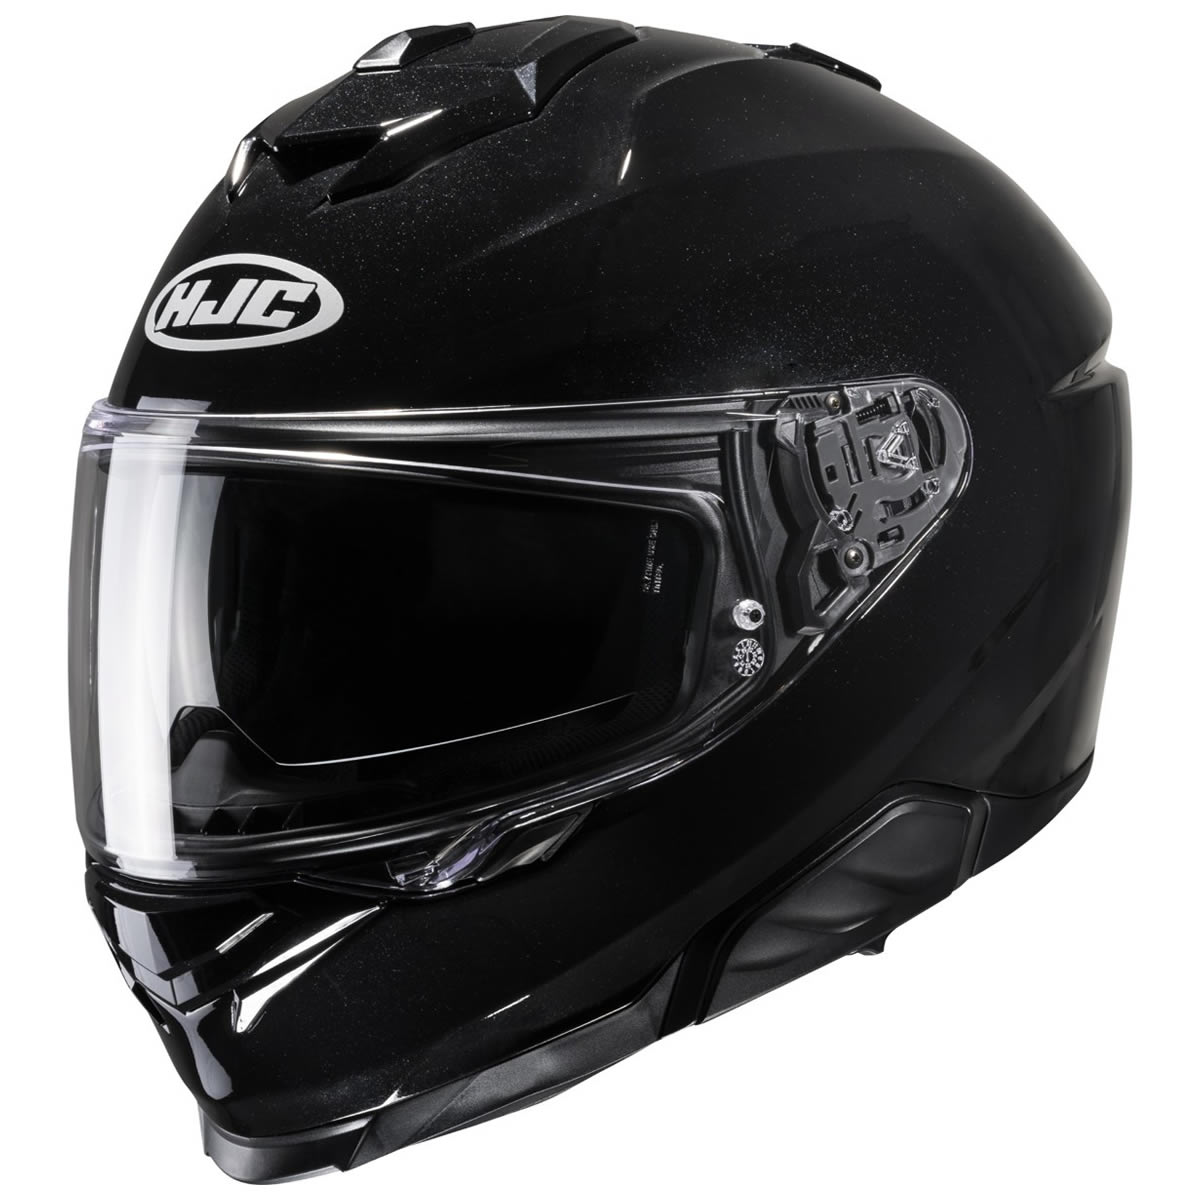 HJC Helm i71 Solid, schwarz